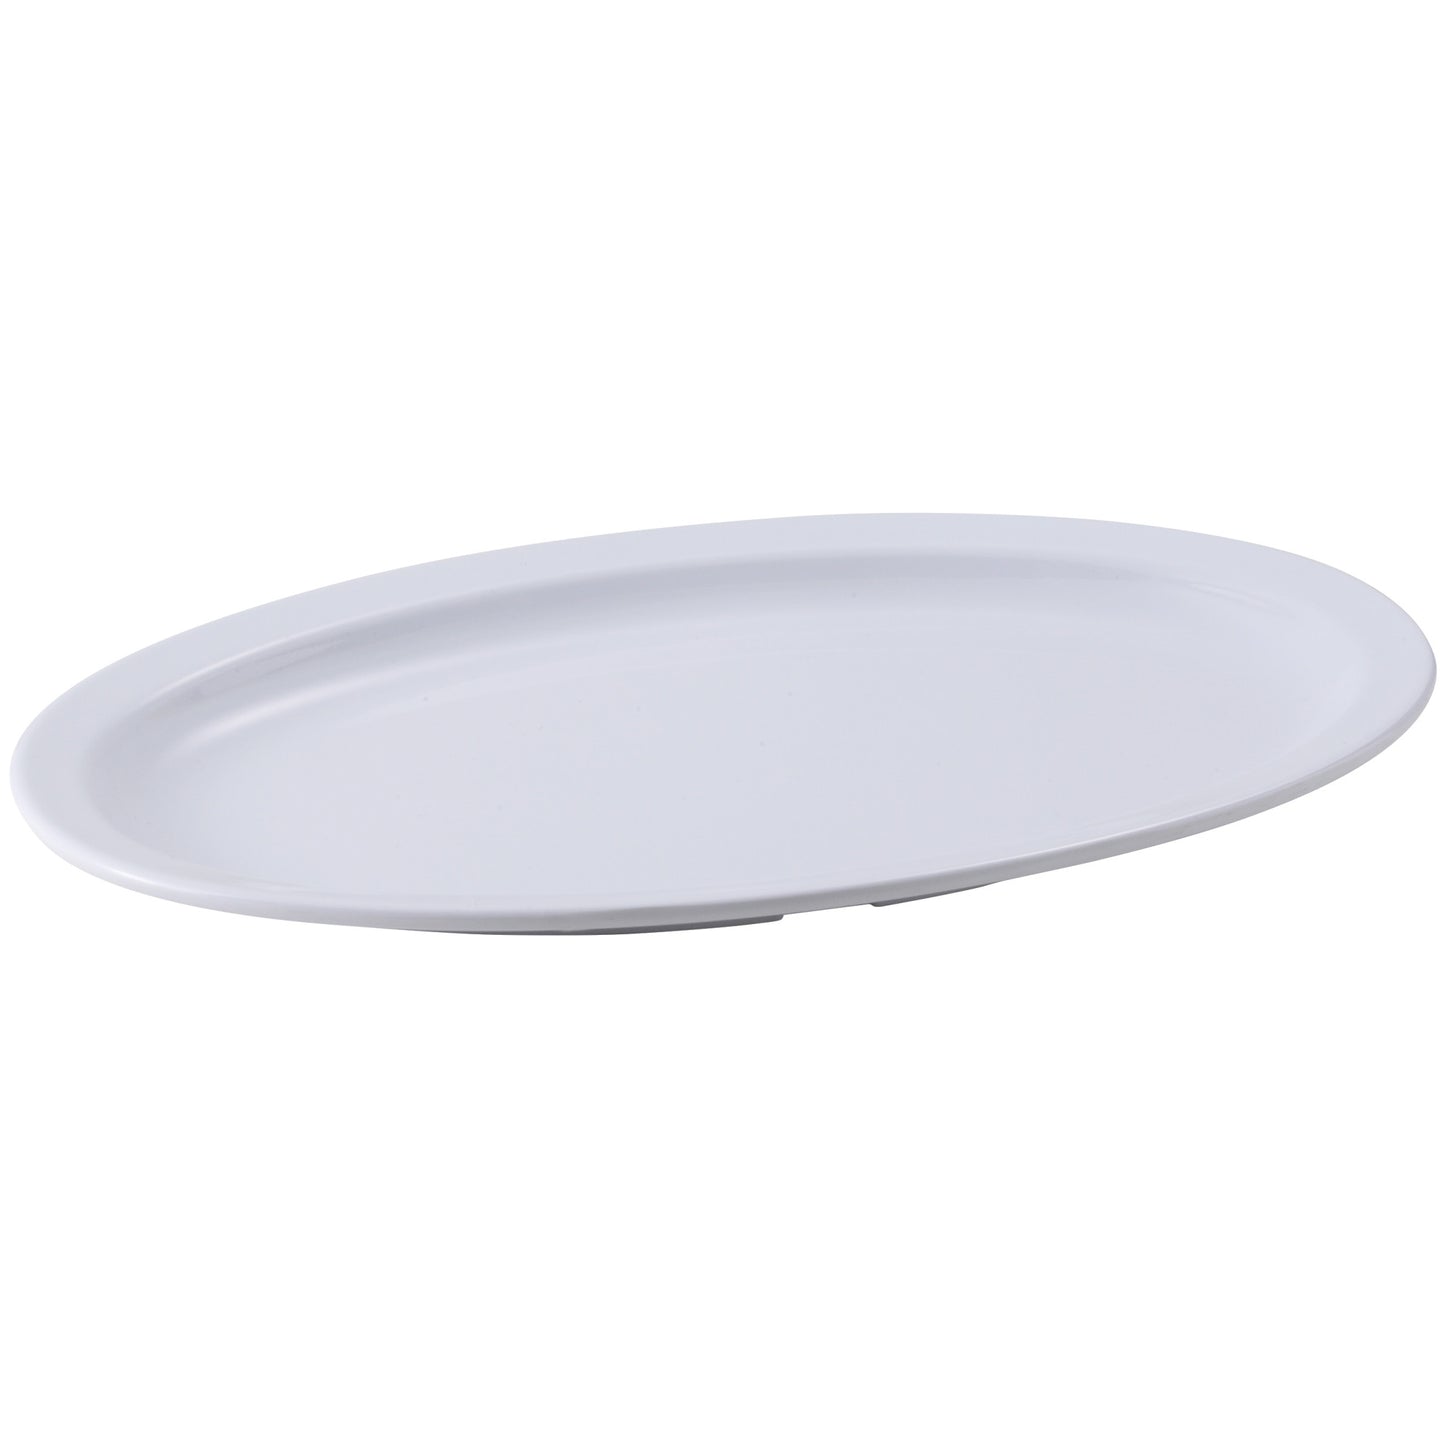 MMPO-138W - Melamine 13" x 8-1/2" Oval Platter - White